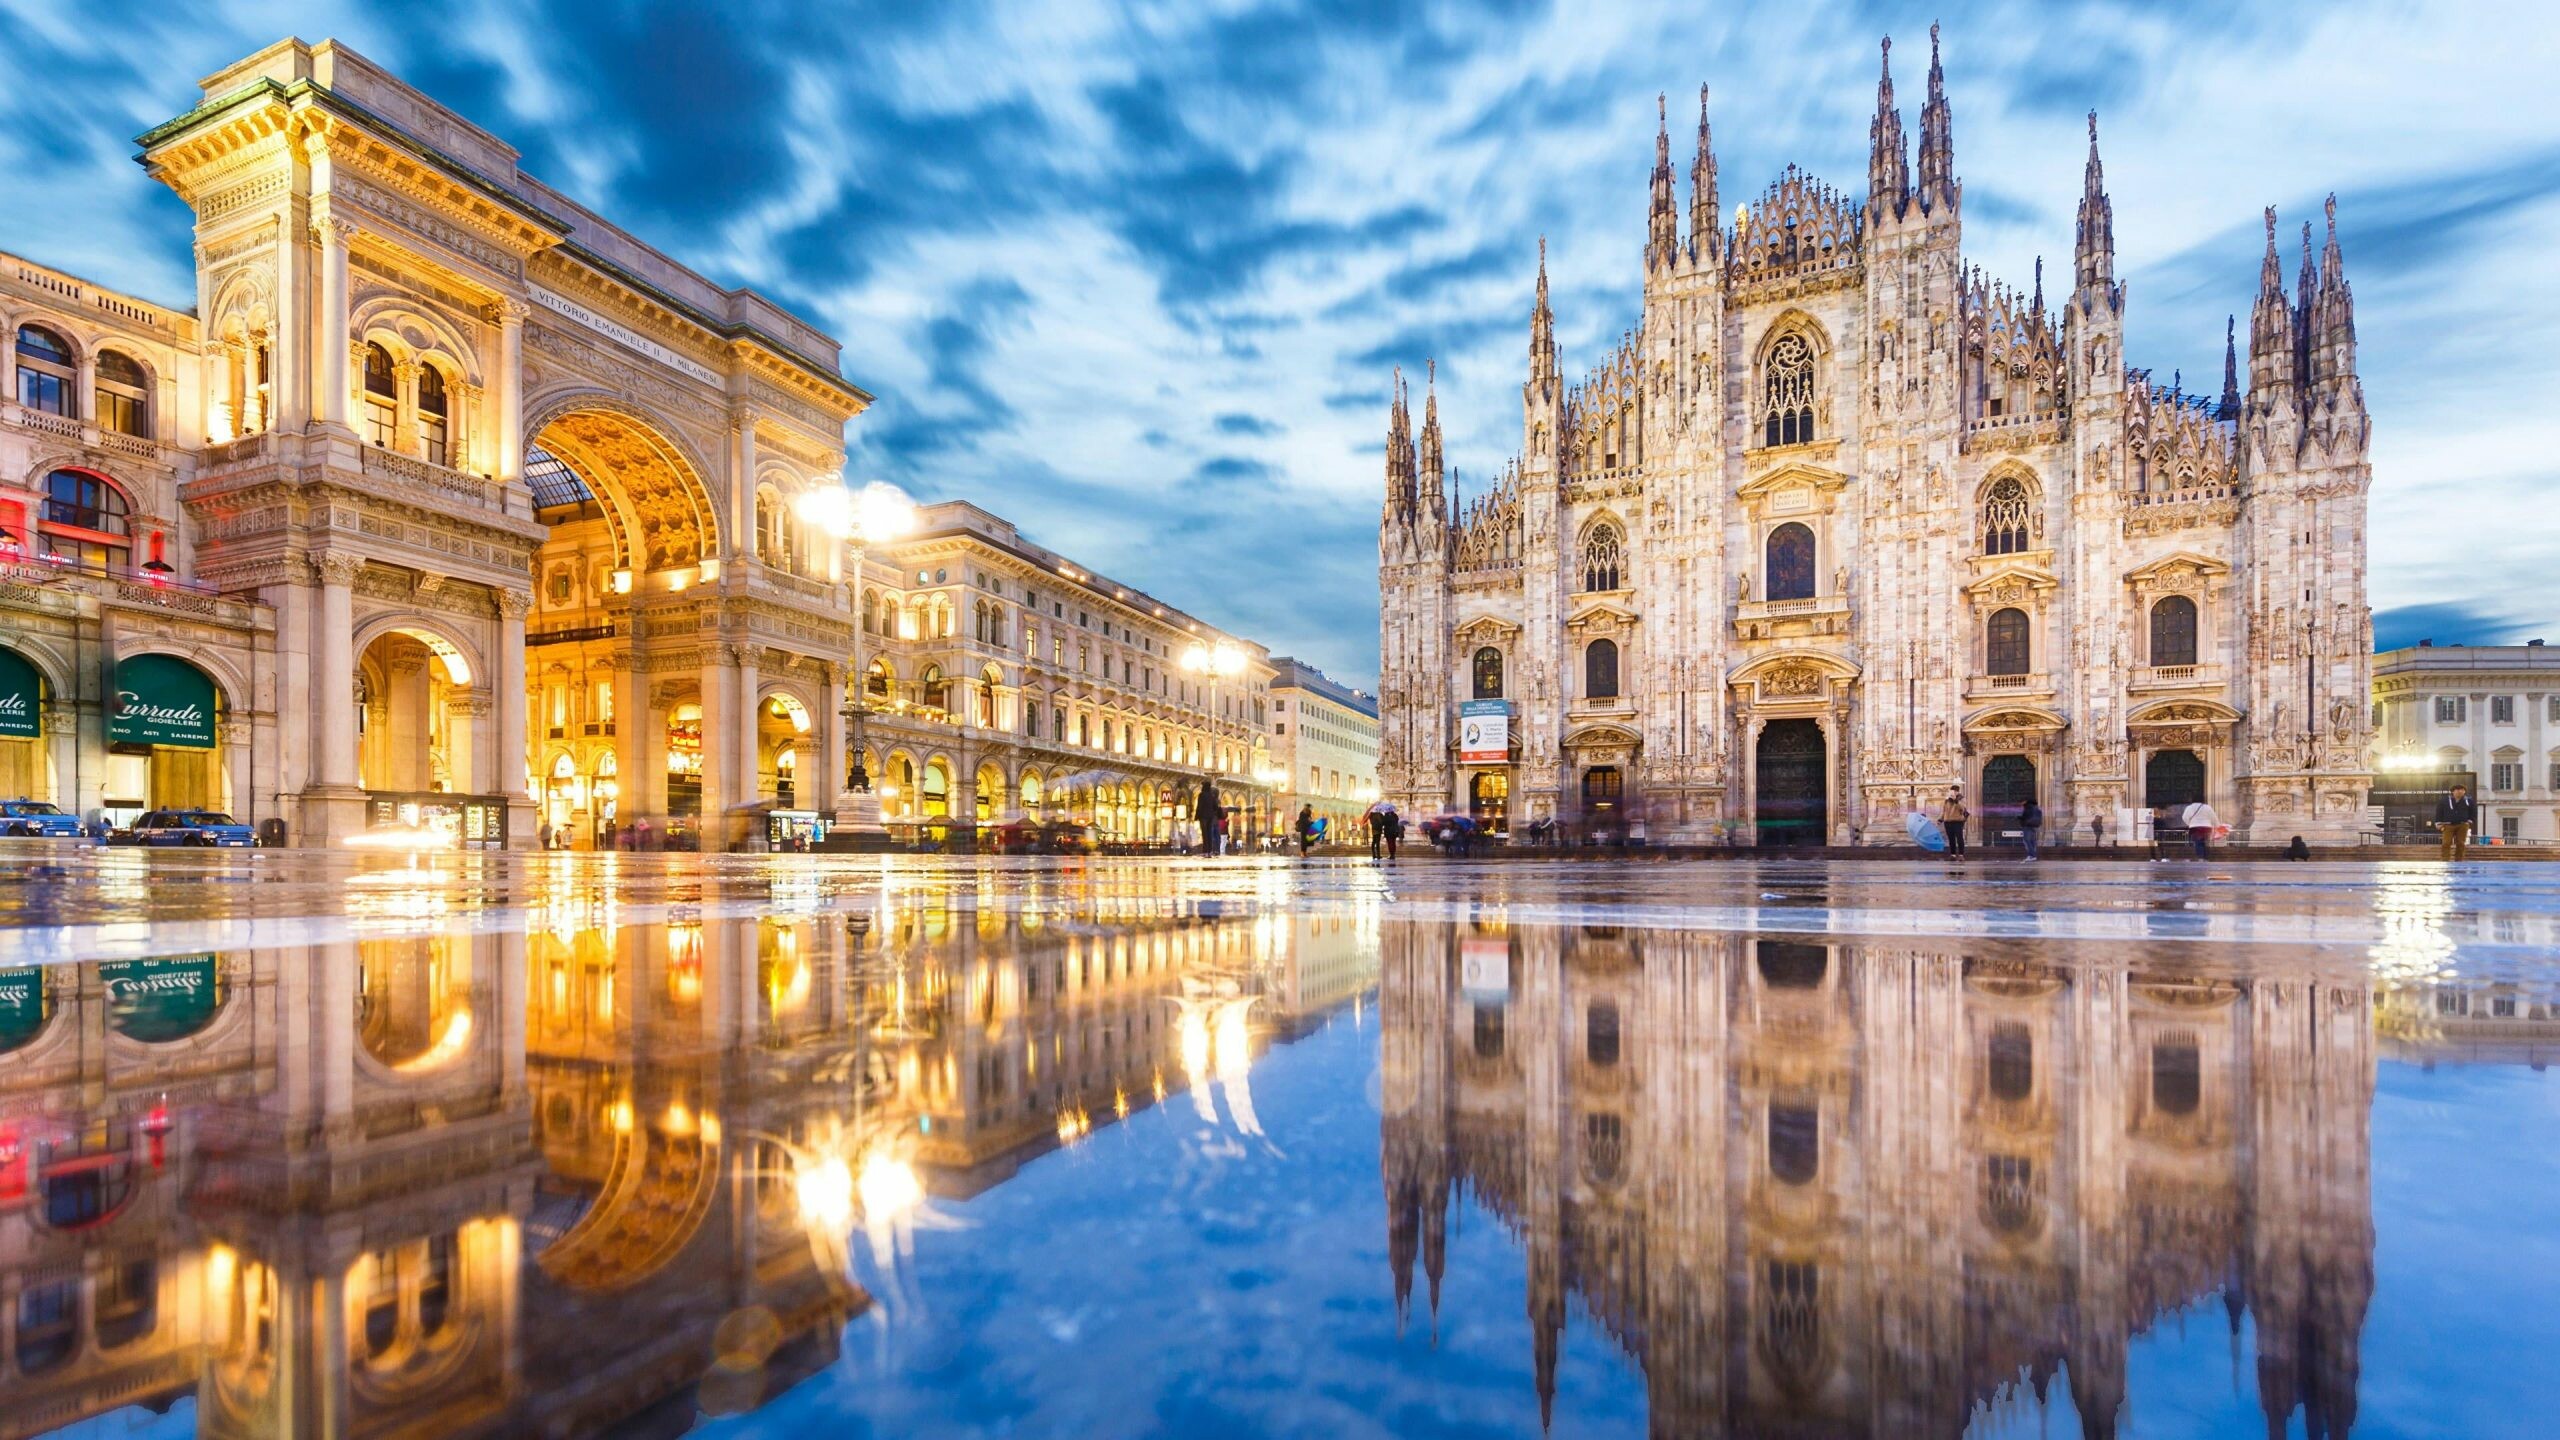 Italy: Piazza del Duomo, Milan Cathedral, Europe. 2560x1440 HD Wallpaper.